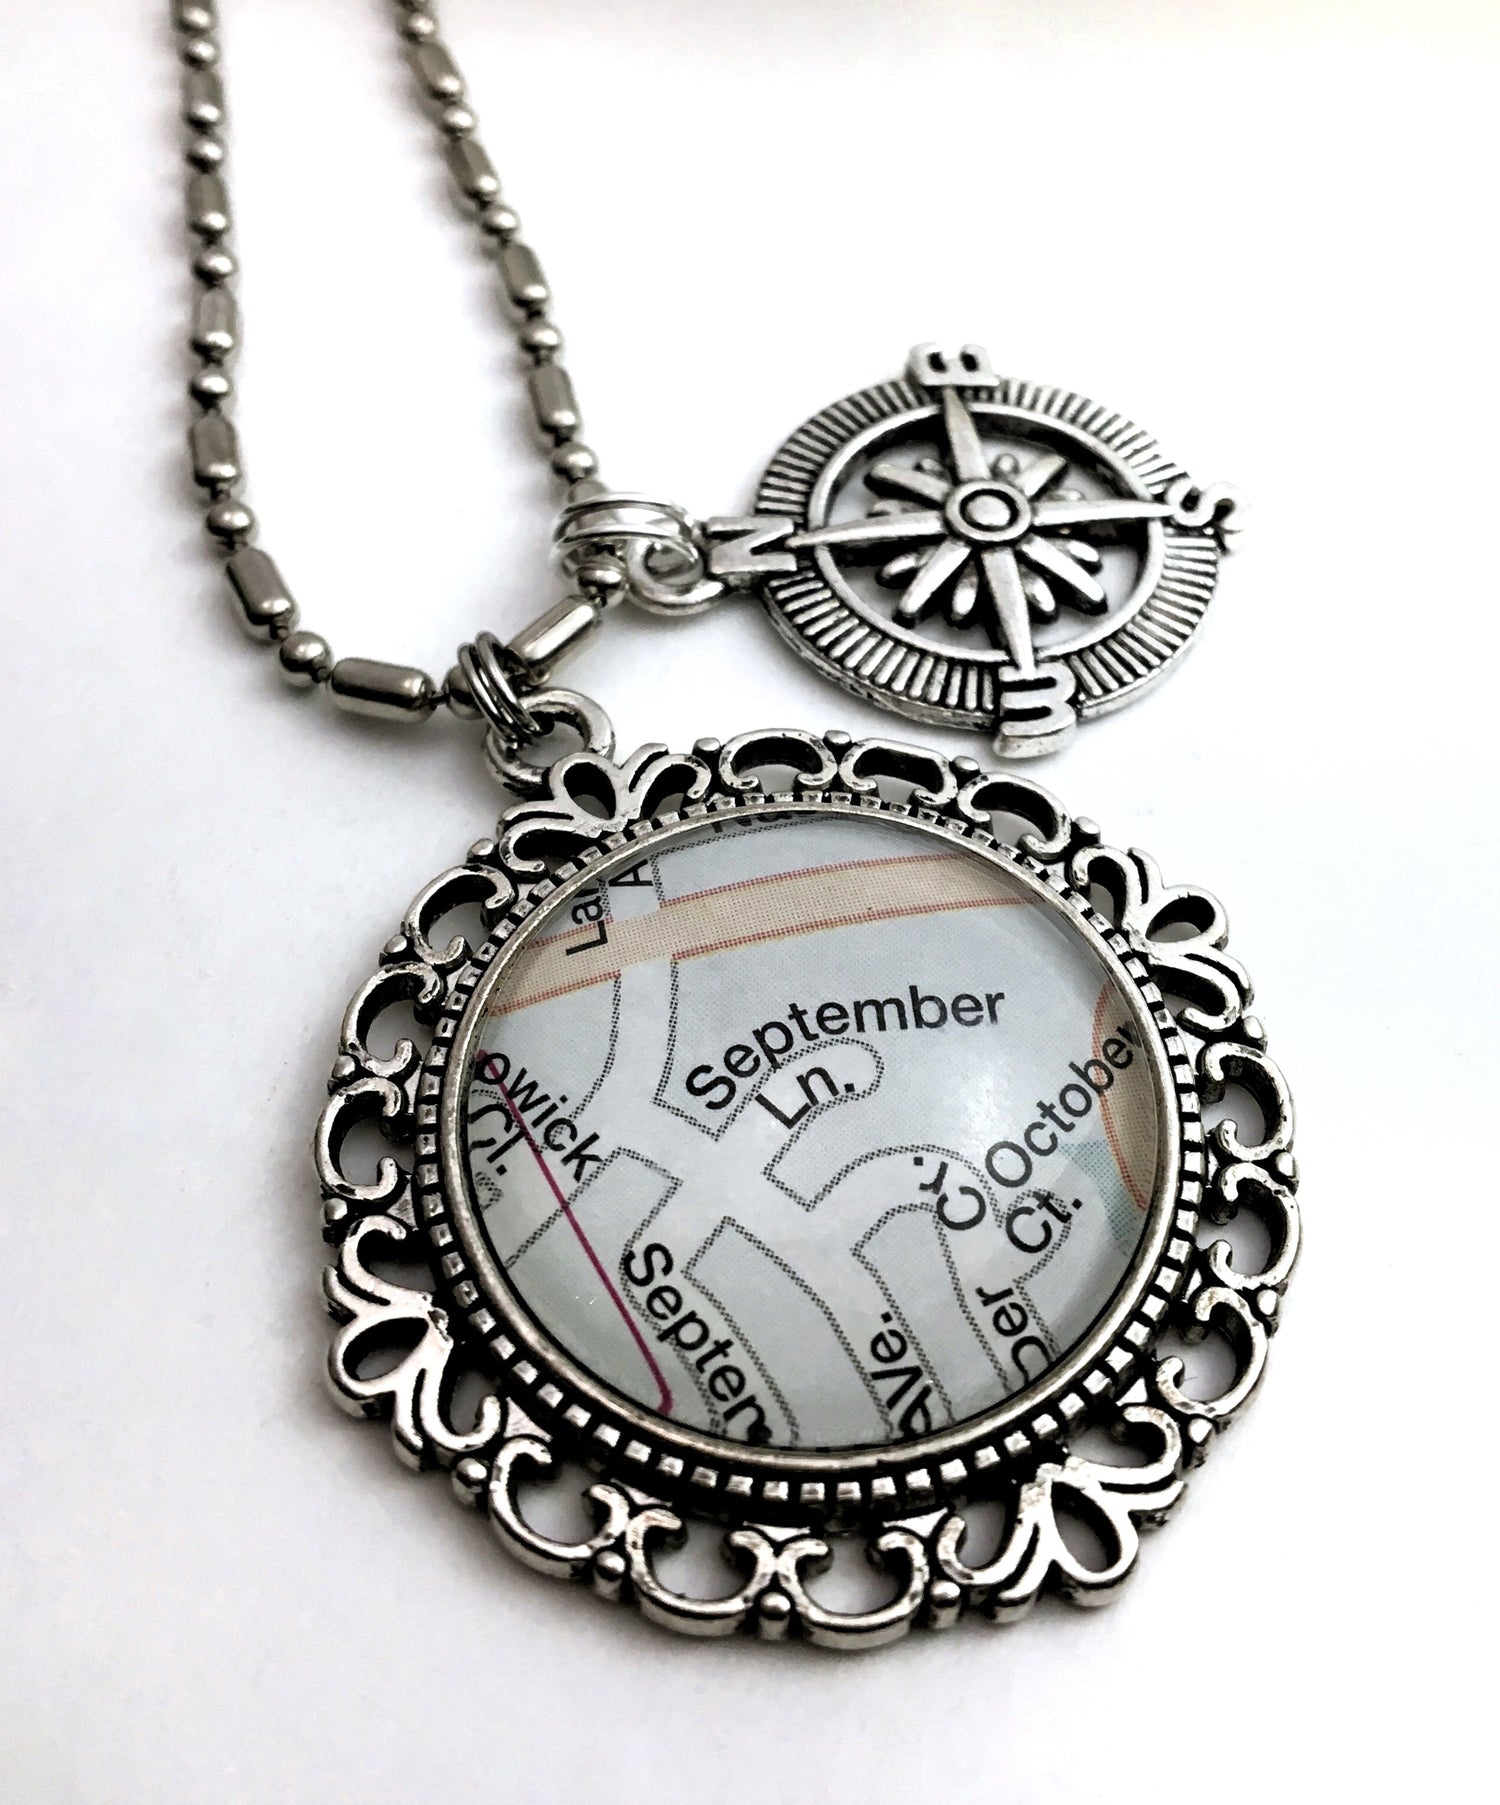 Custom handmade original vintage map jewelry necklace accessories